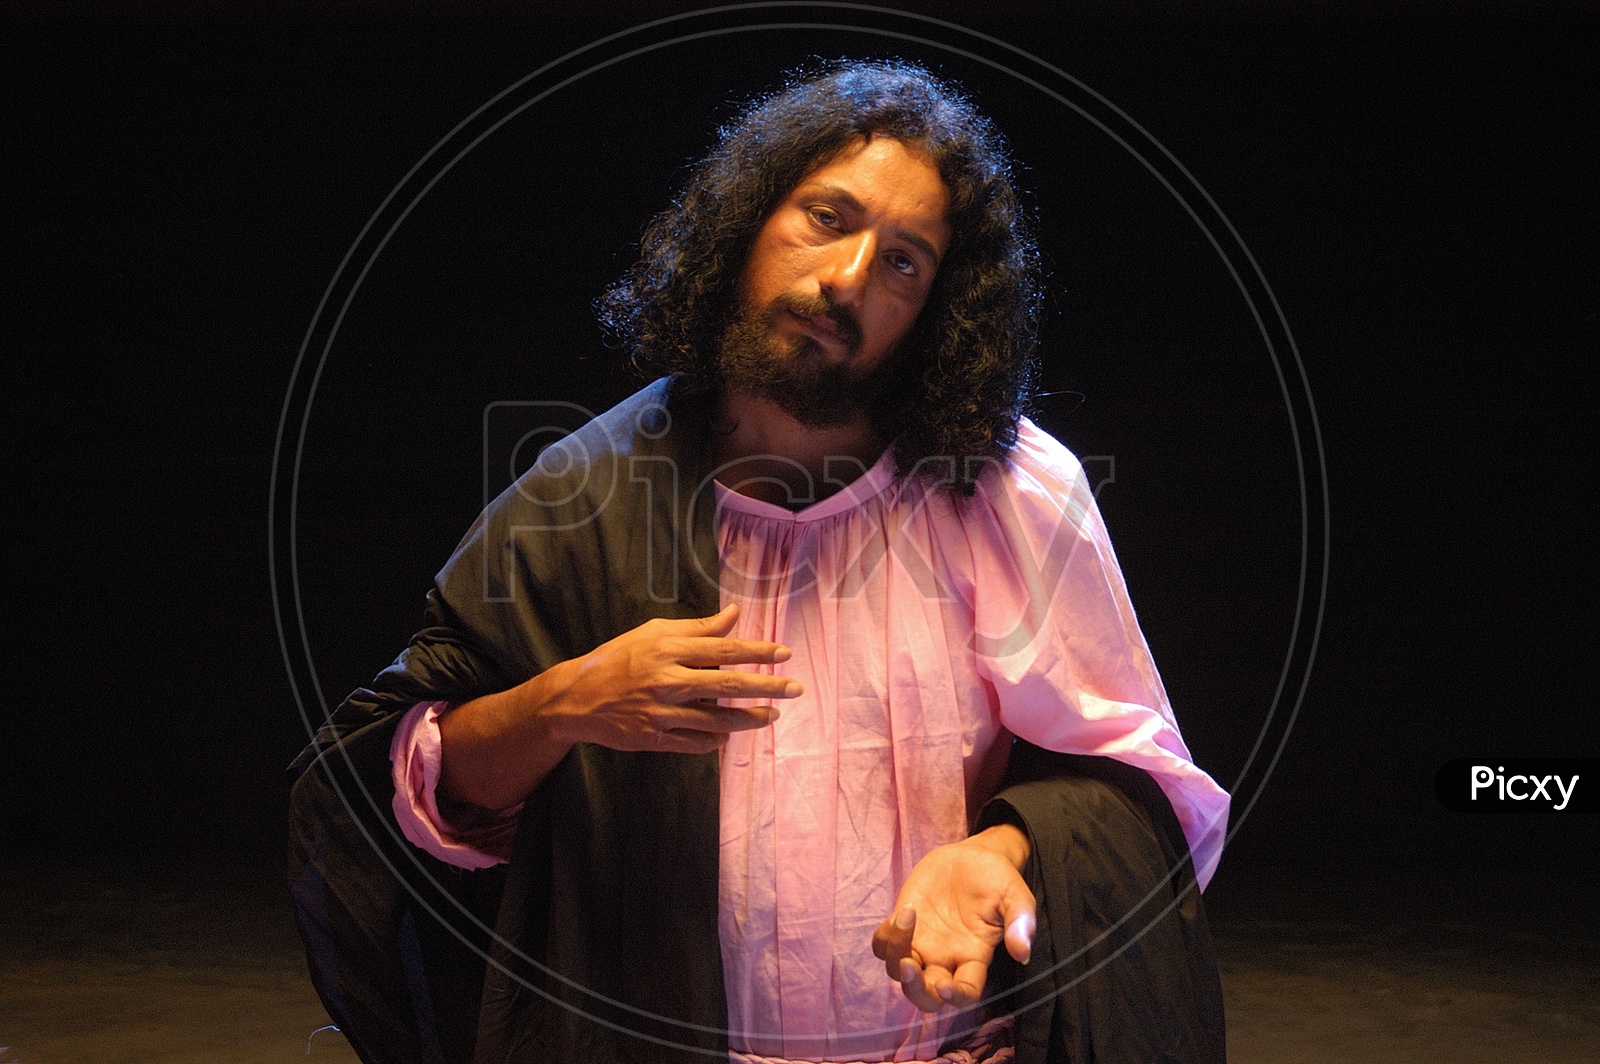 Indian man enacting as Jesus Christ with long hair